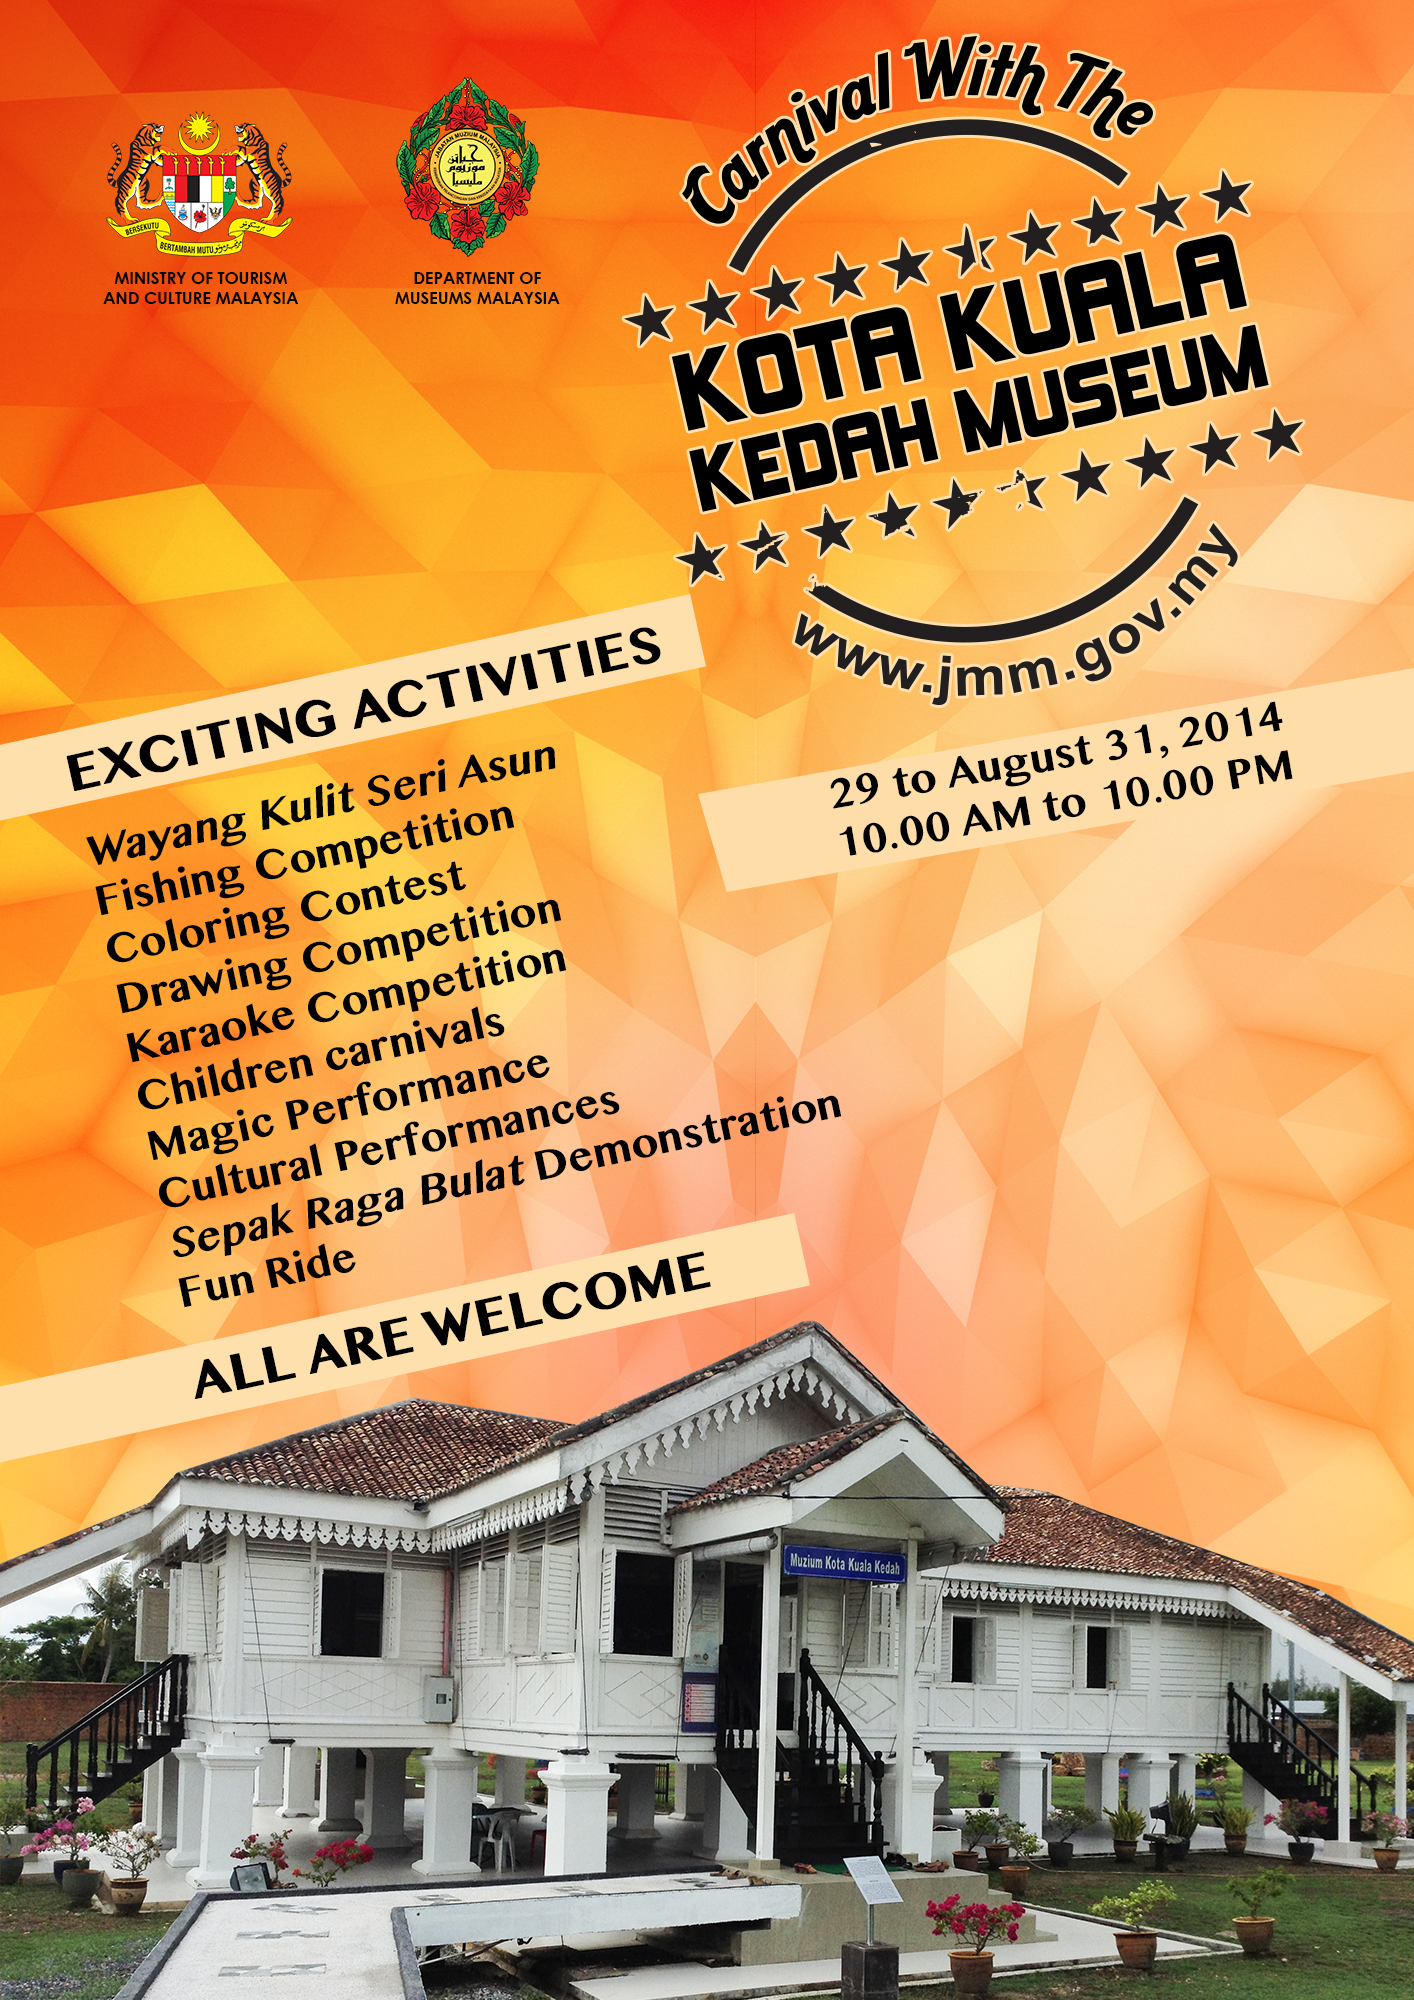 Carnival With The Kota Kuala Kedah Museum